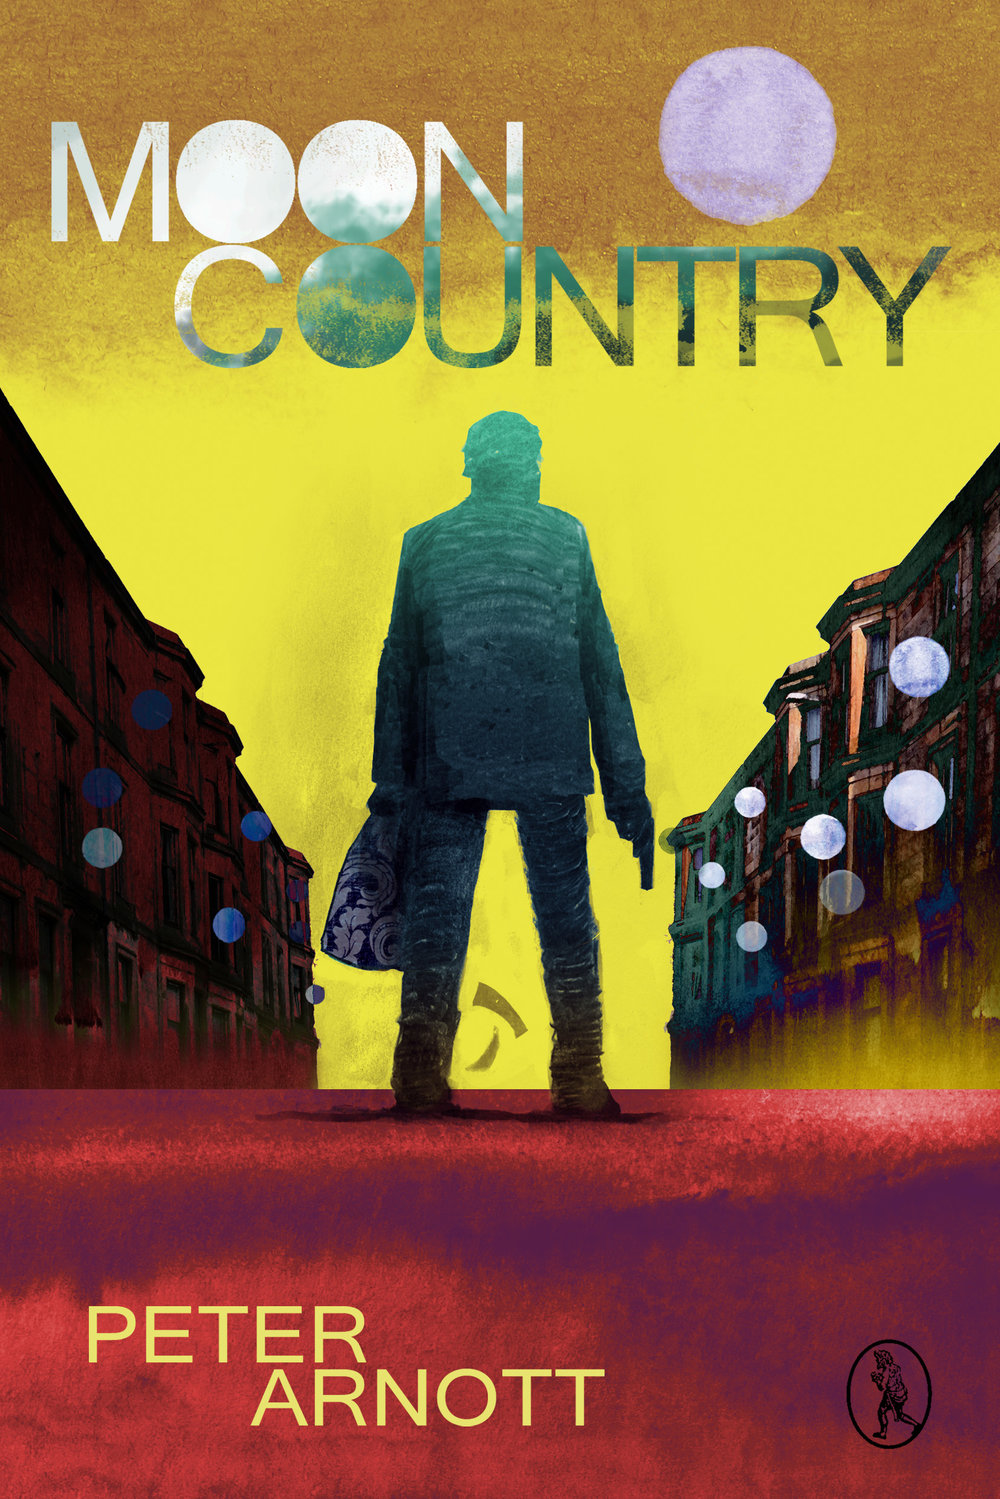 MOON COUNTRY cover art slim.jpg